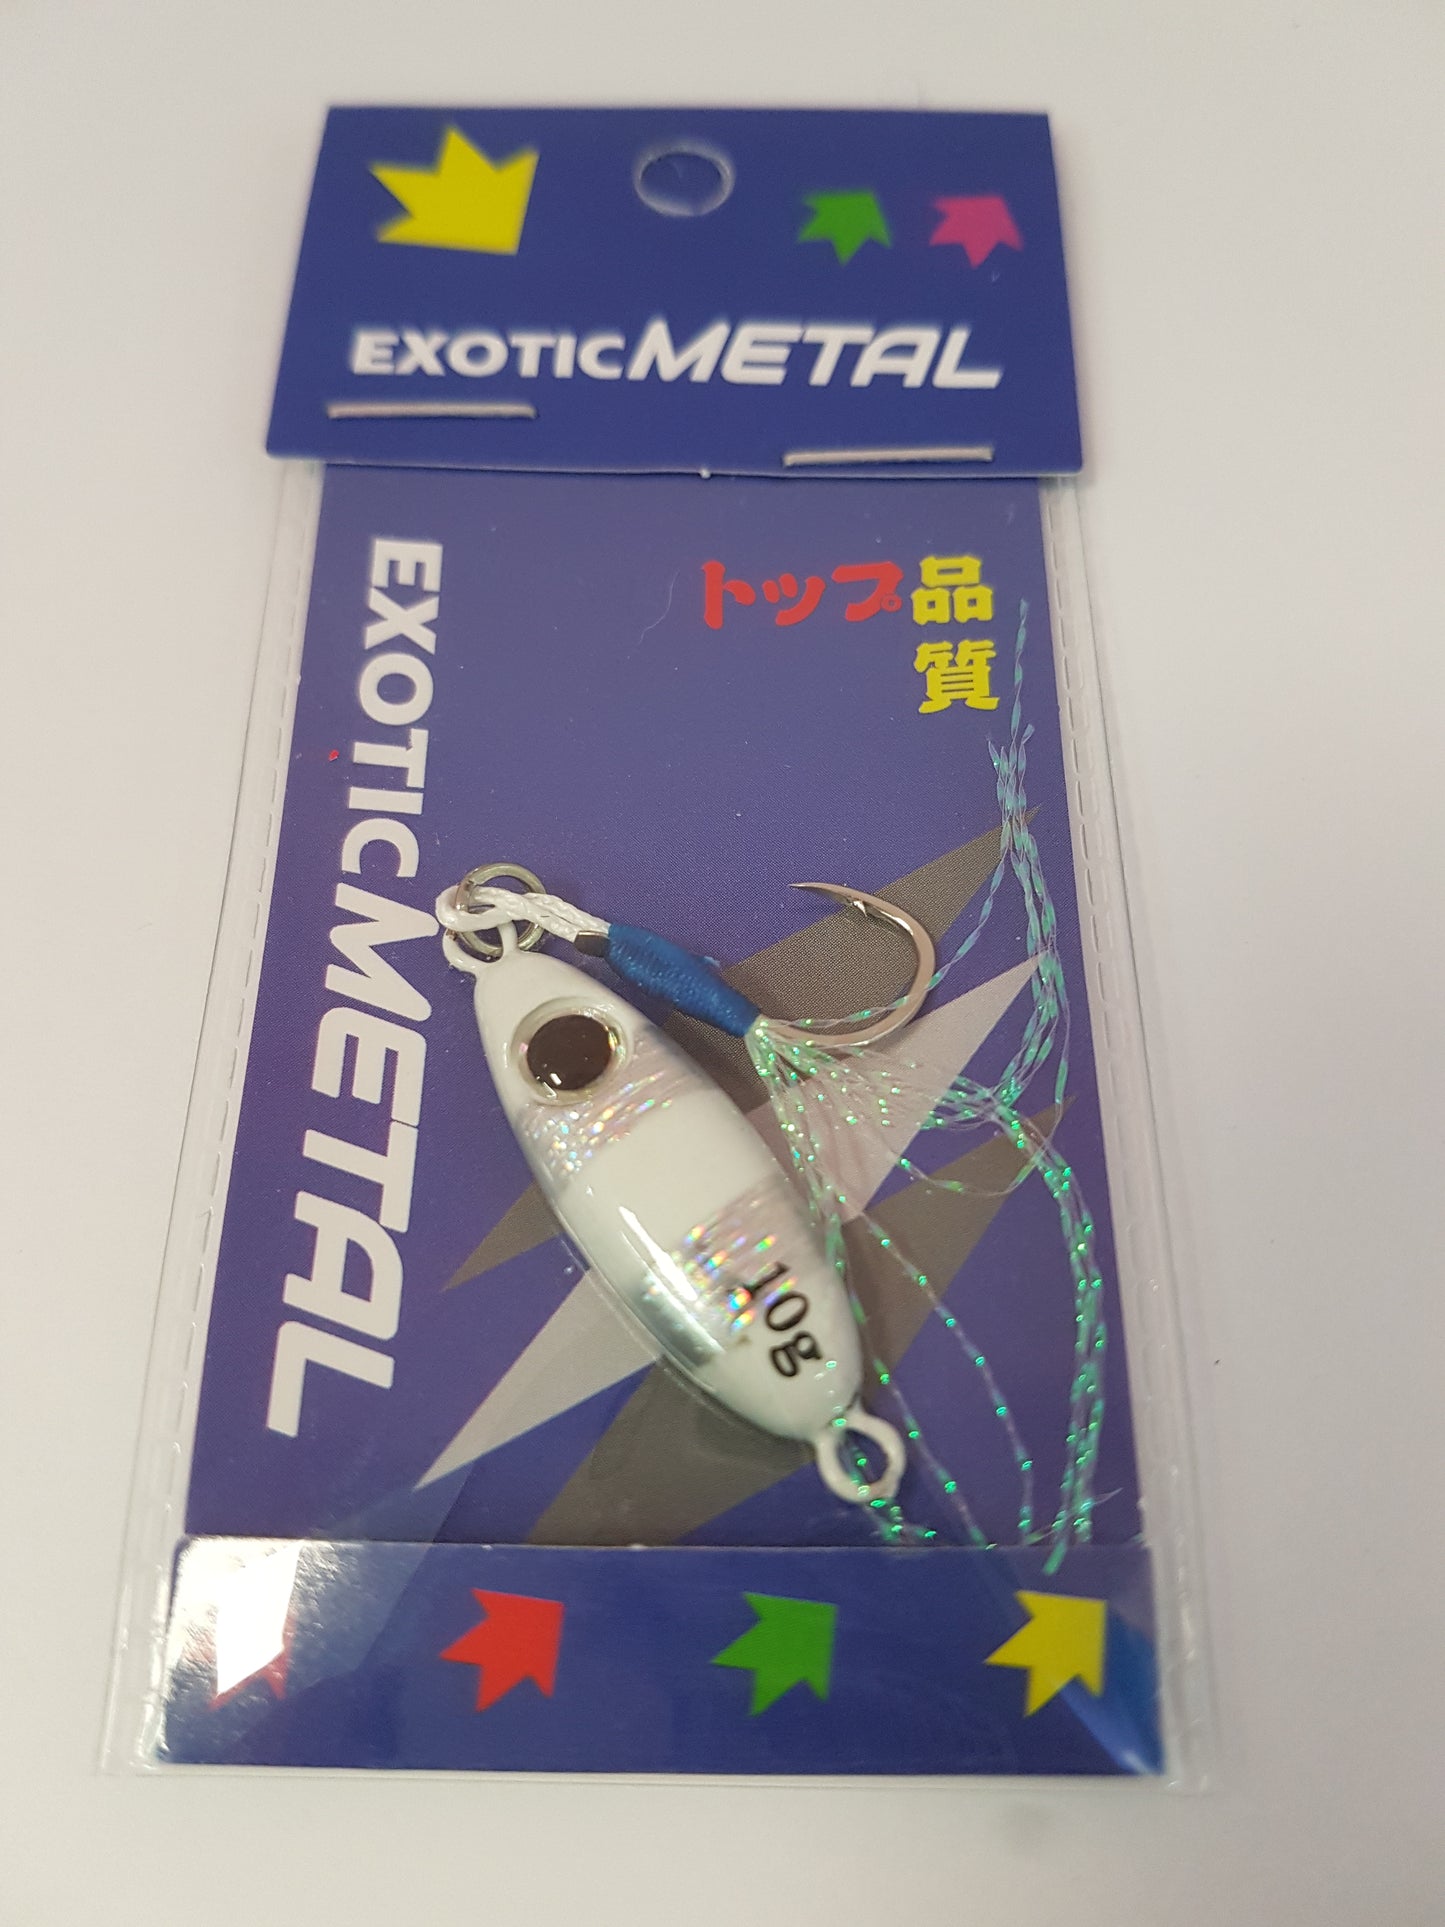 Superse Exotic Metal Micro Rocker Jig 7.5g